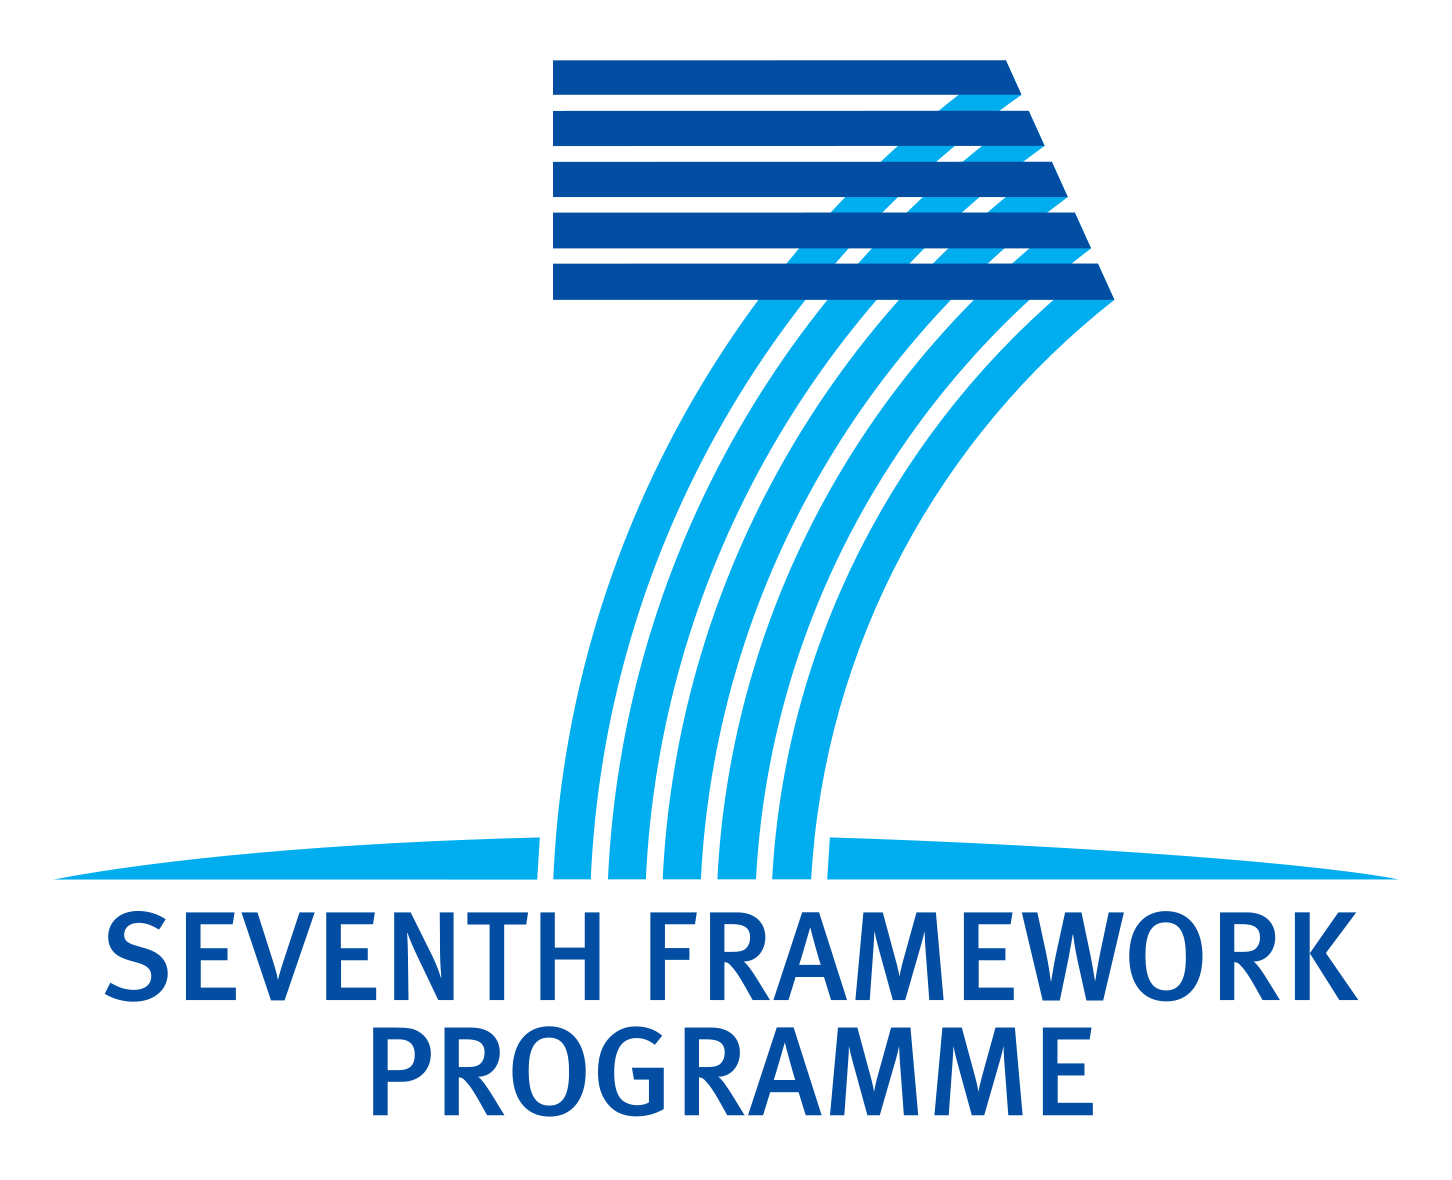 Seventh Framework Programme (FP7)